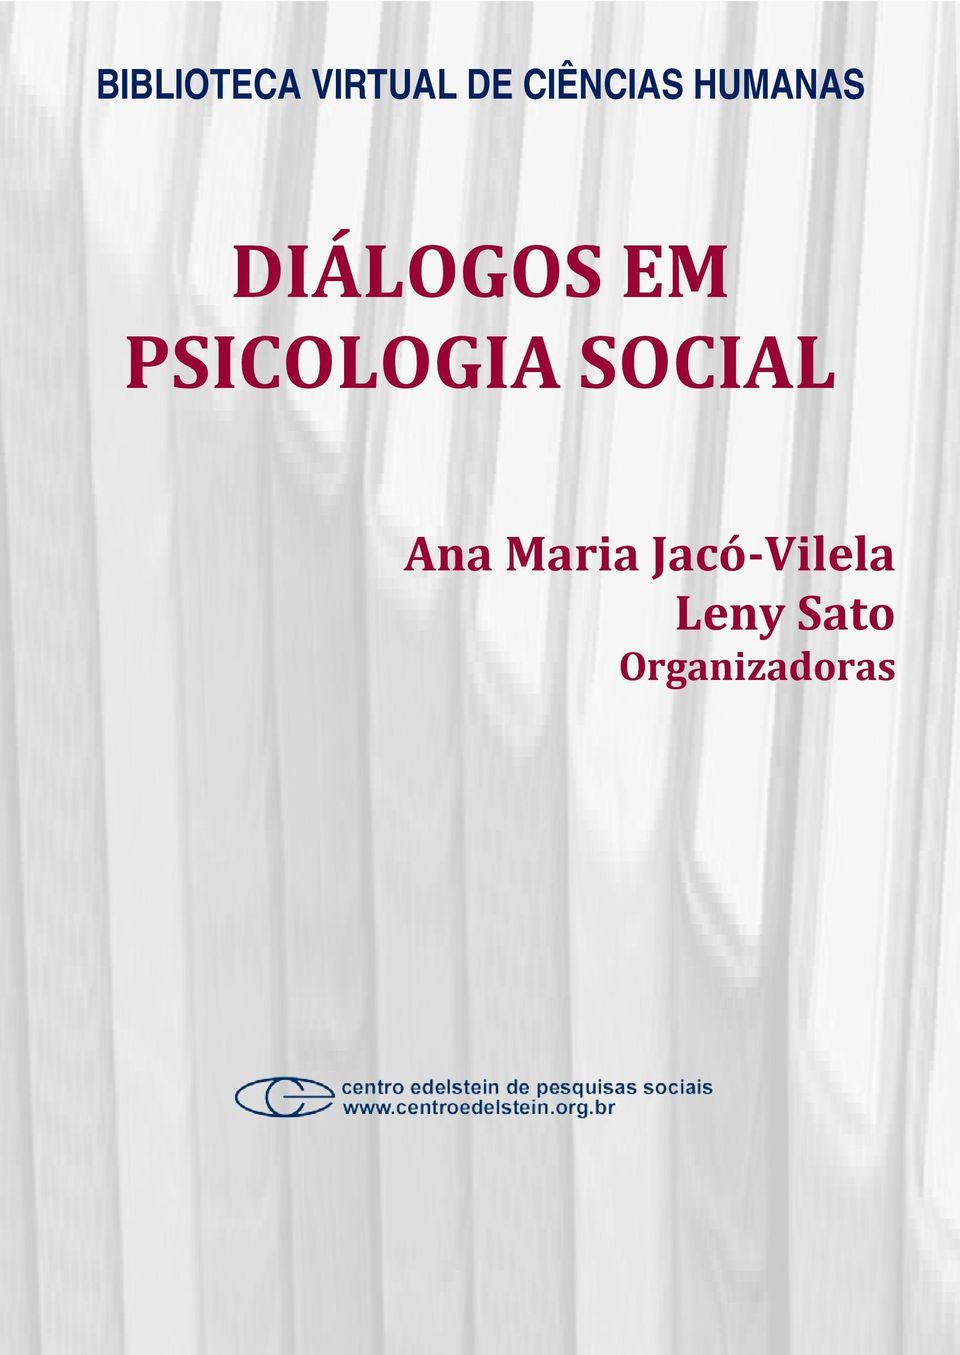 PSICOLOGIA SOCIAL Ana Maria